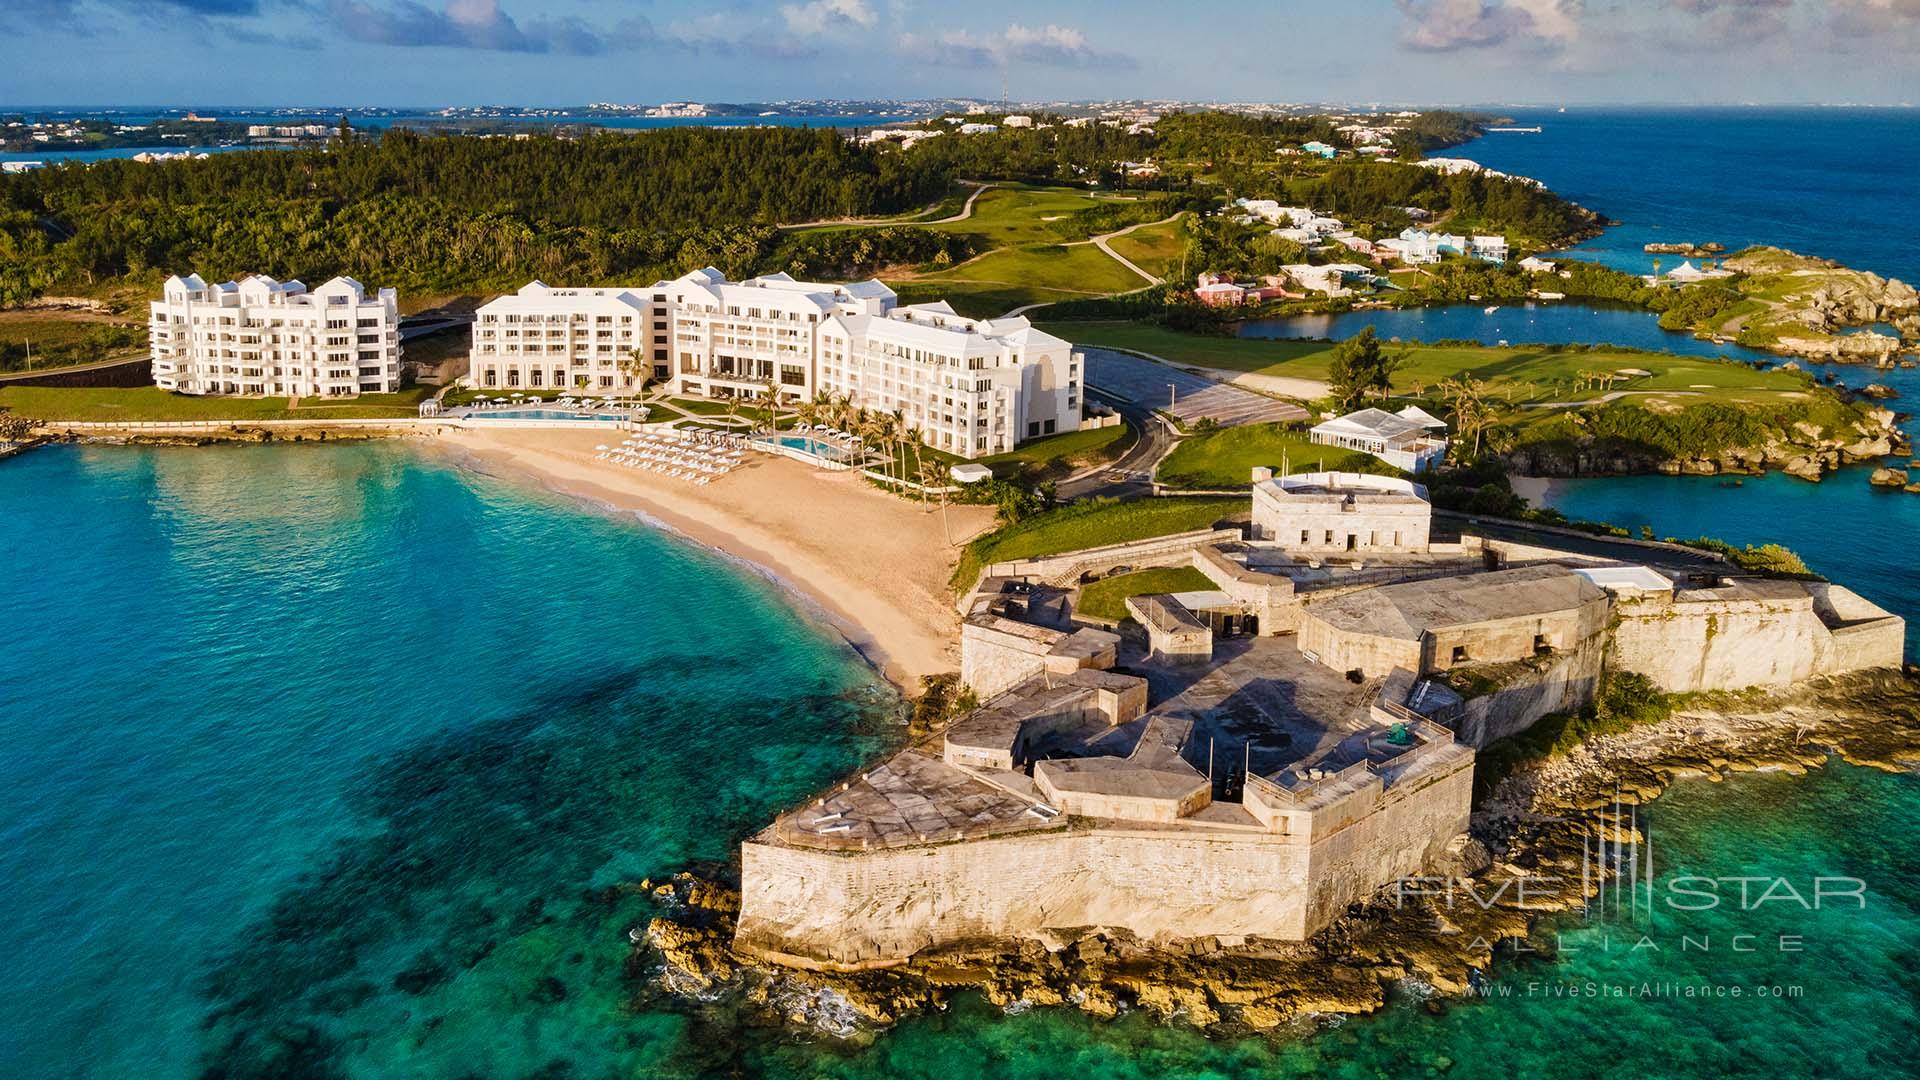 St. Regis Bermuda Resort